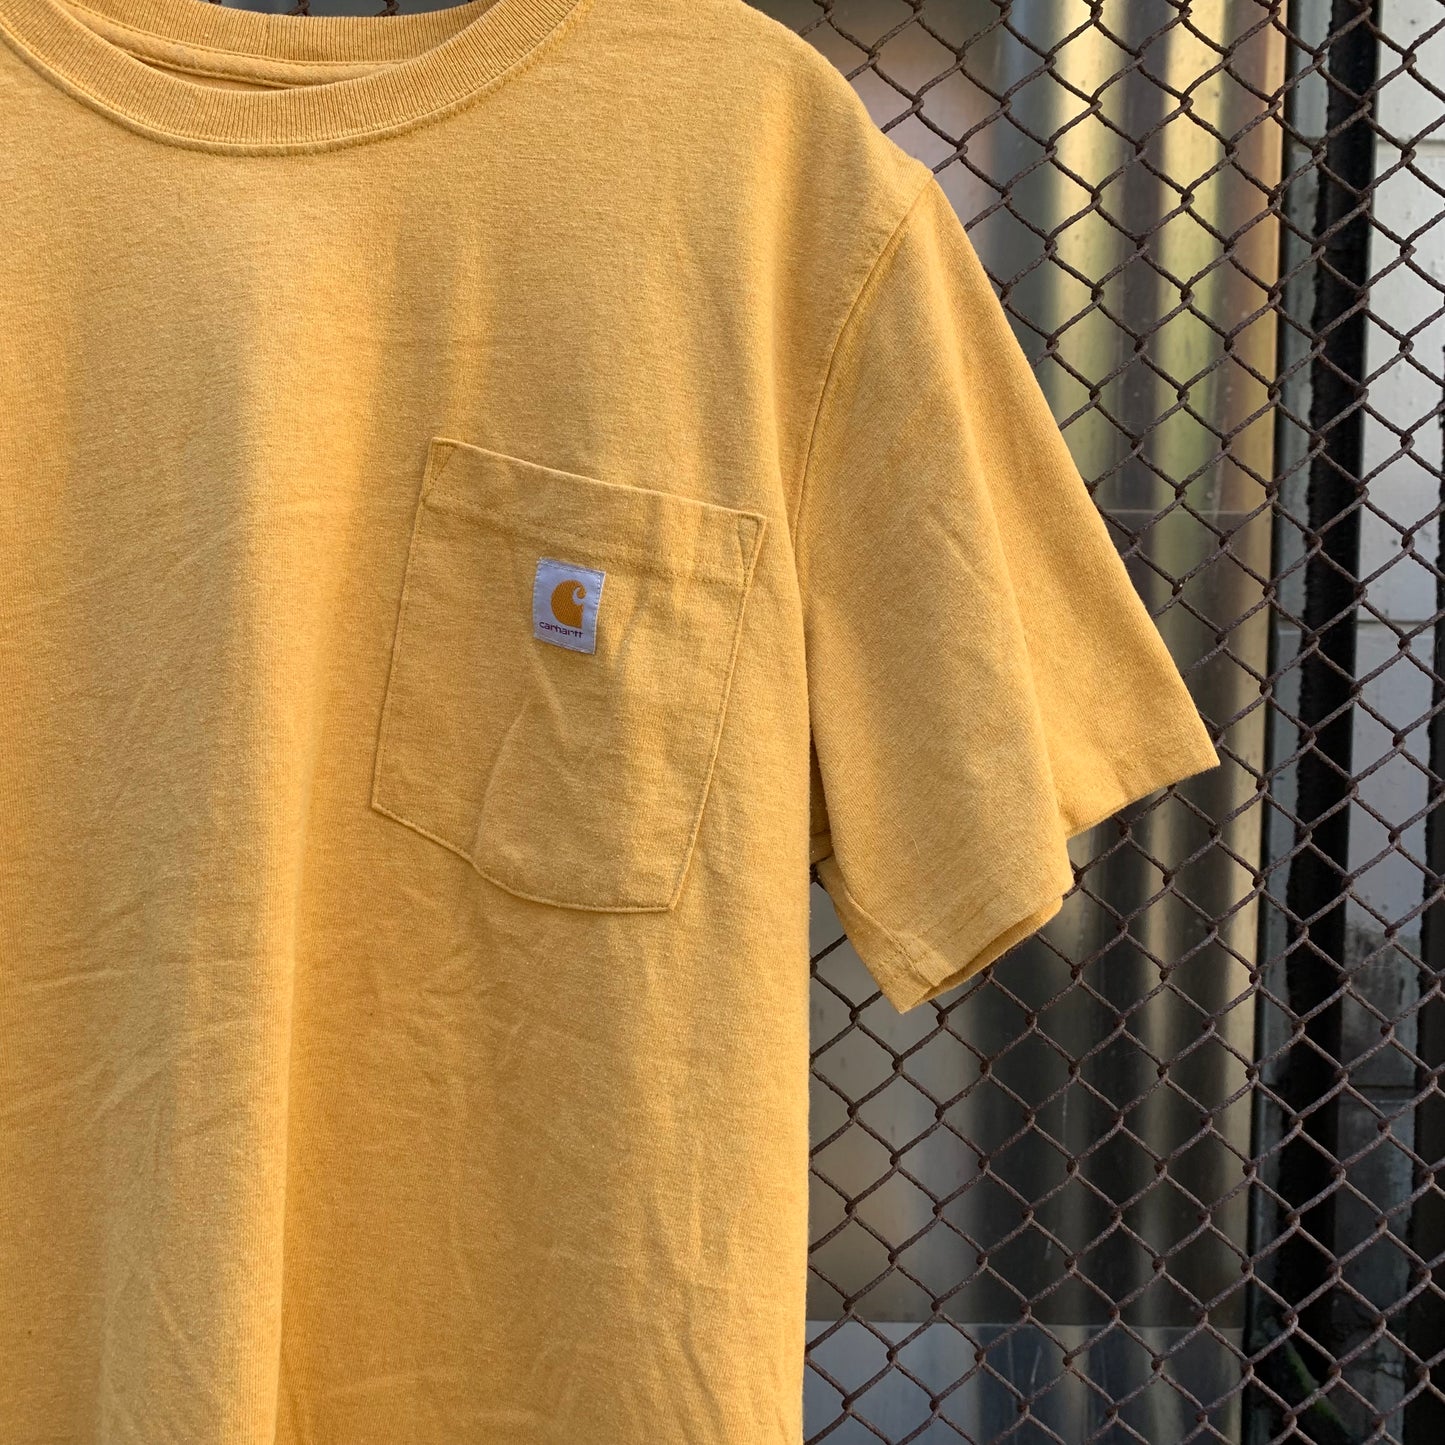 Carhartt Short Sleeves Yellow Tee-Shirt